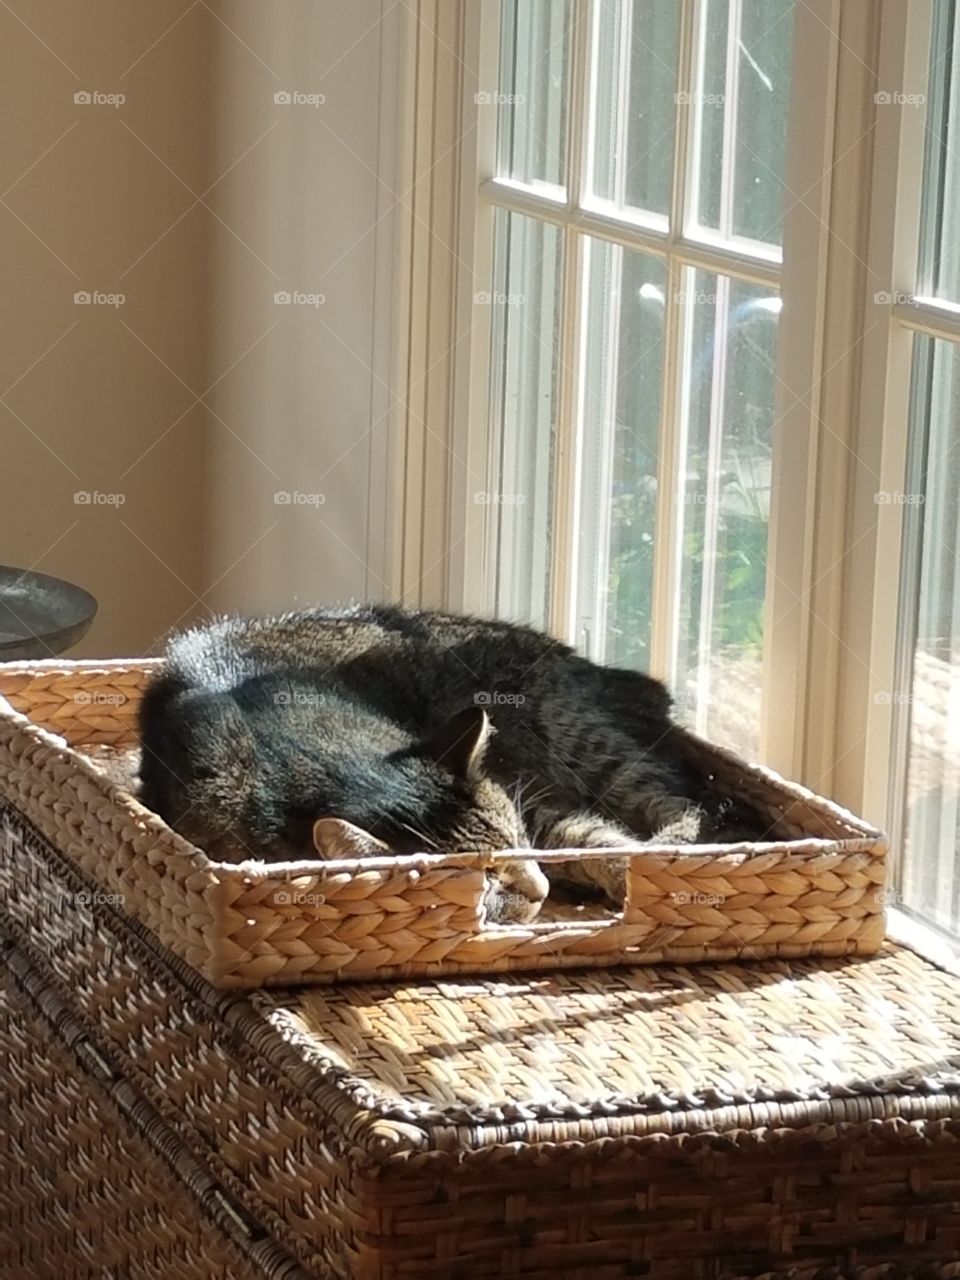 Cat, Basket, Mammal, Pet, Furniture